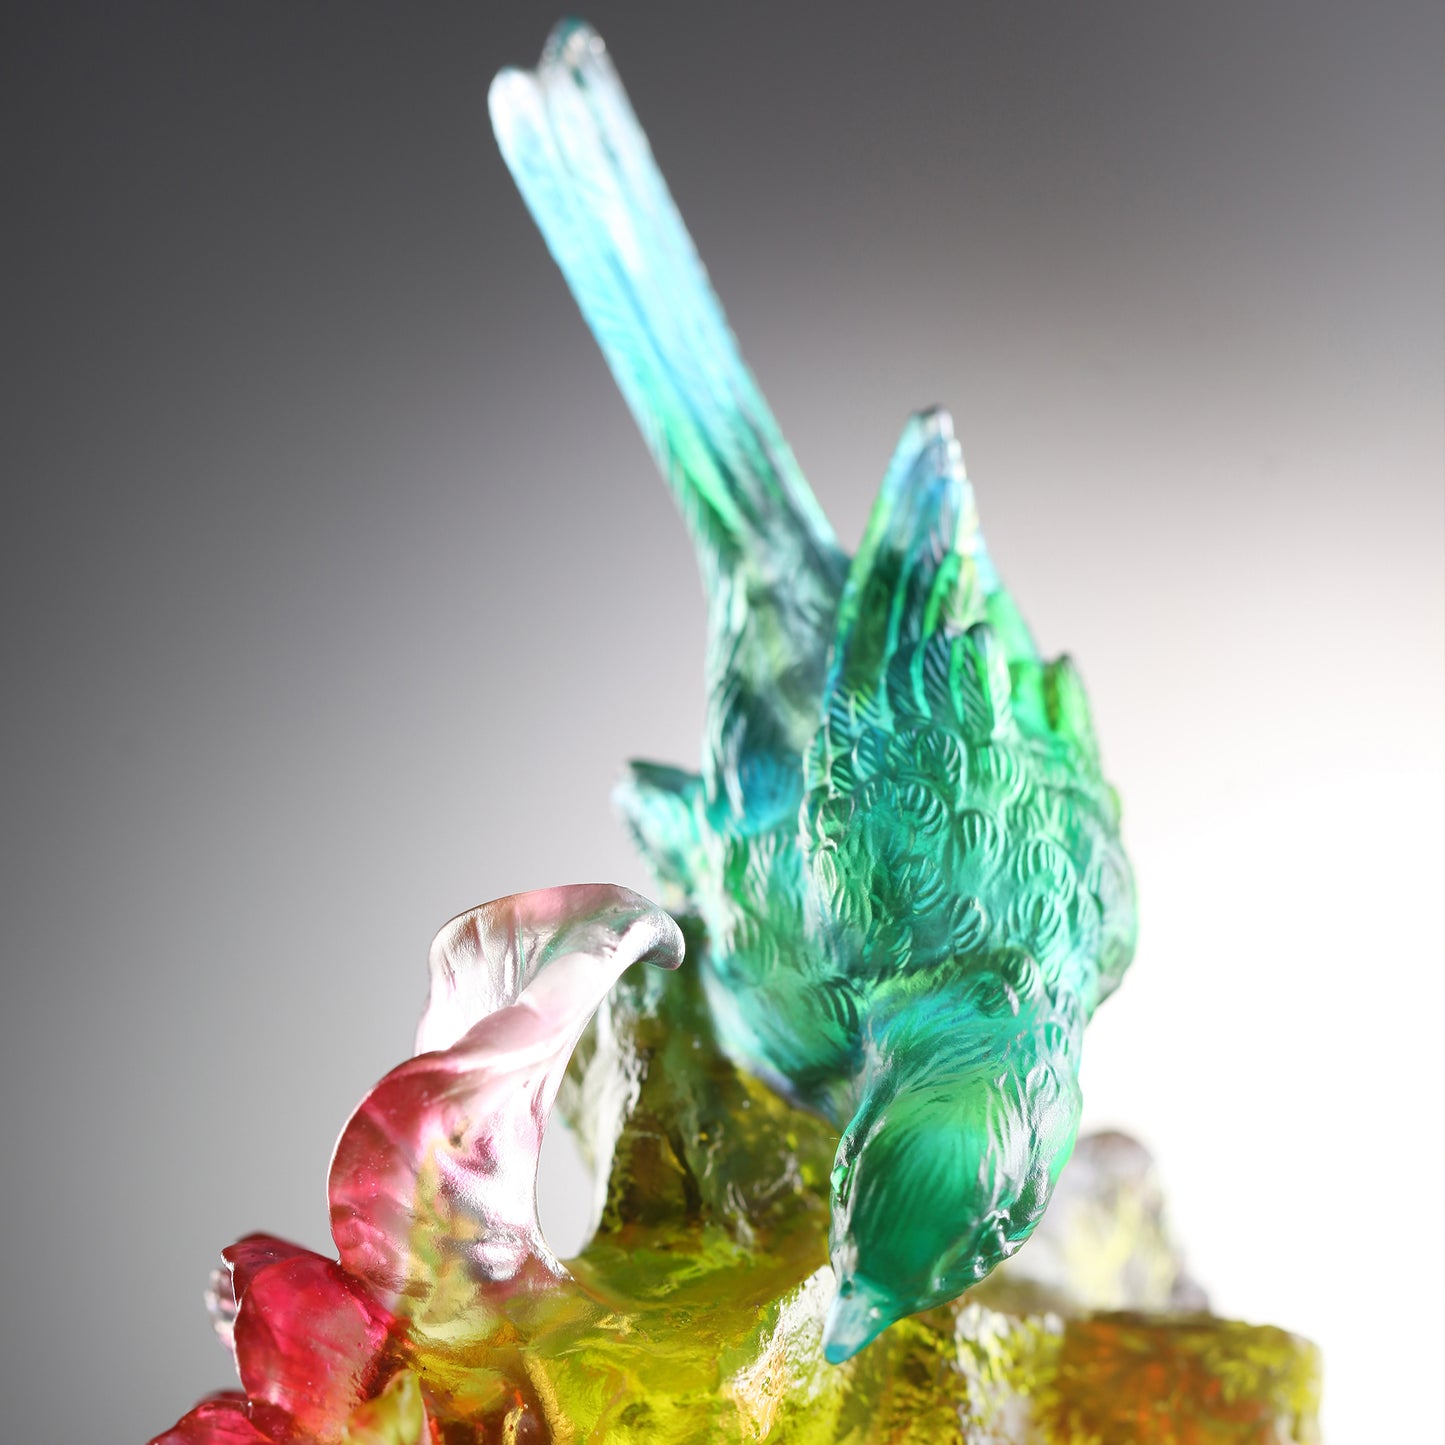 LIULI Crystal Fish and Bird, Beauty Lies Between Here and There - LIULI Crystal Art